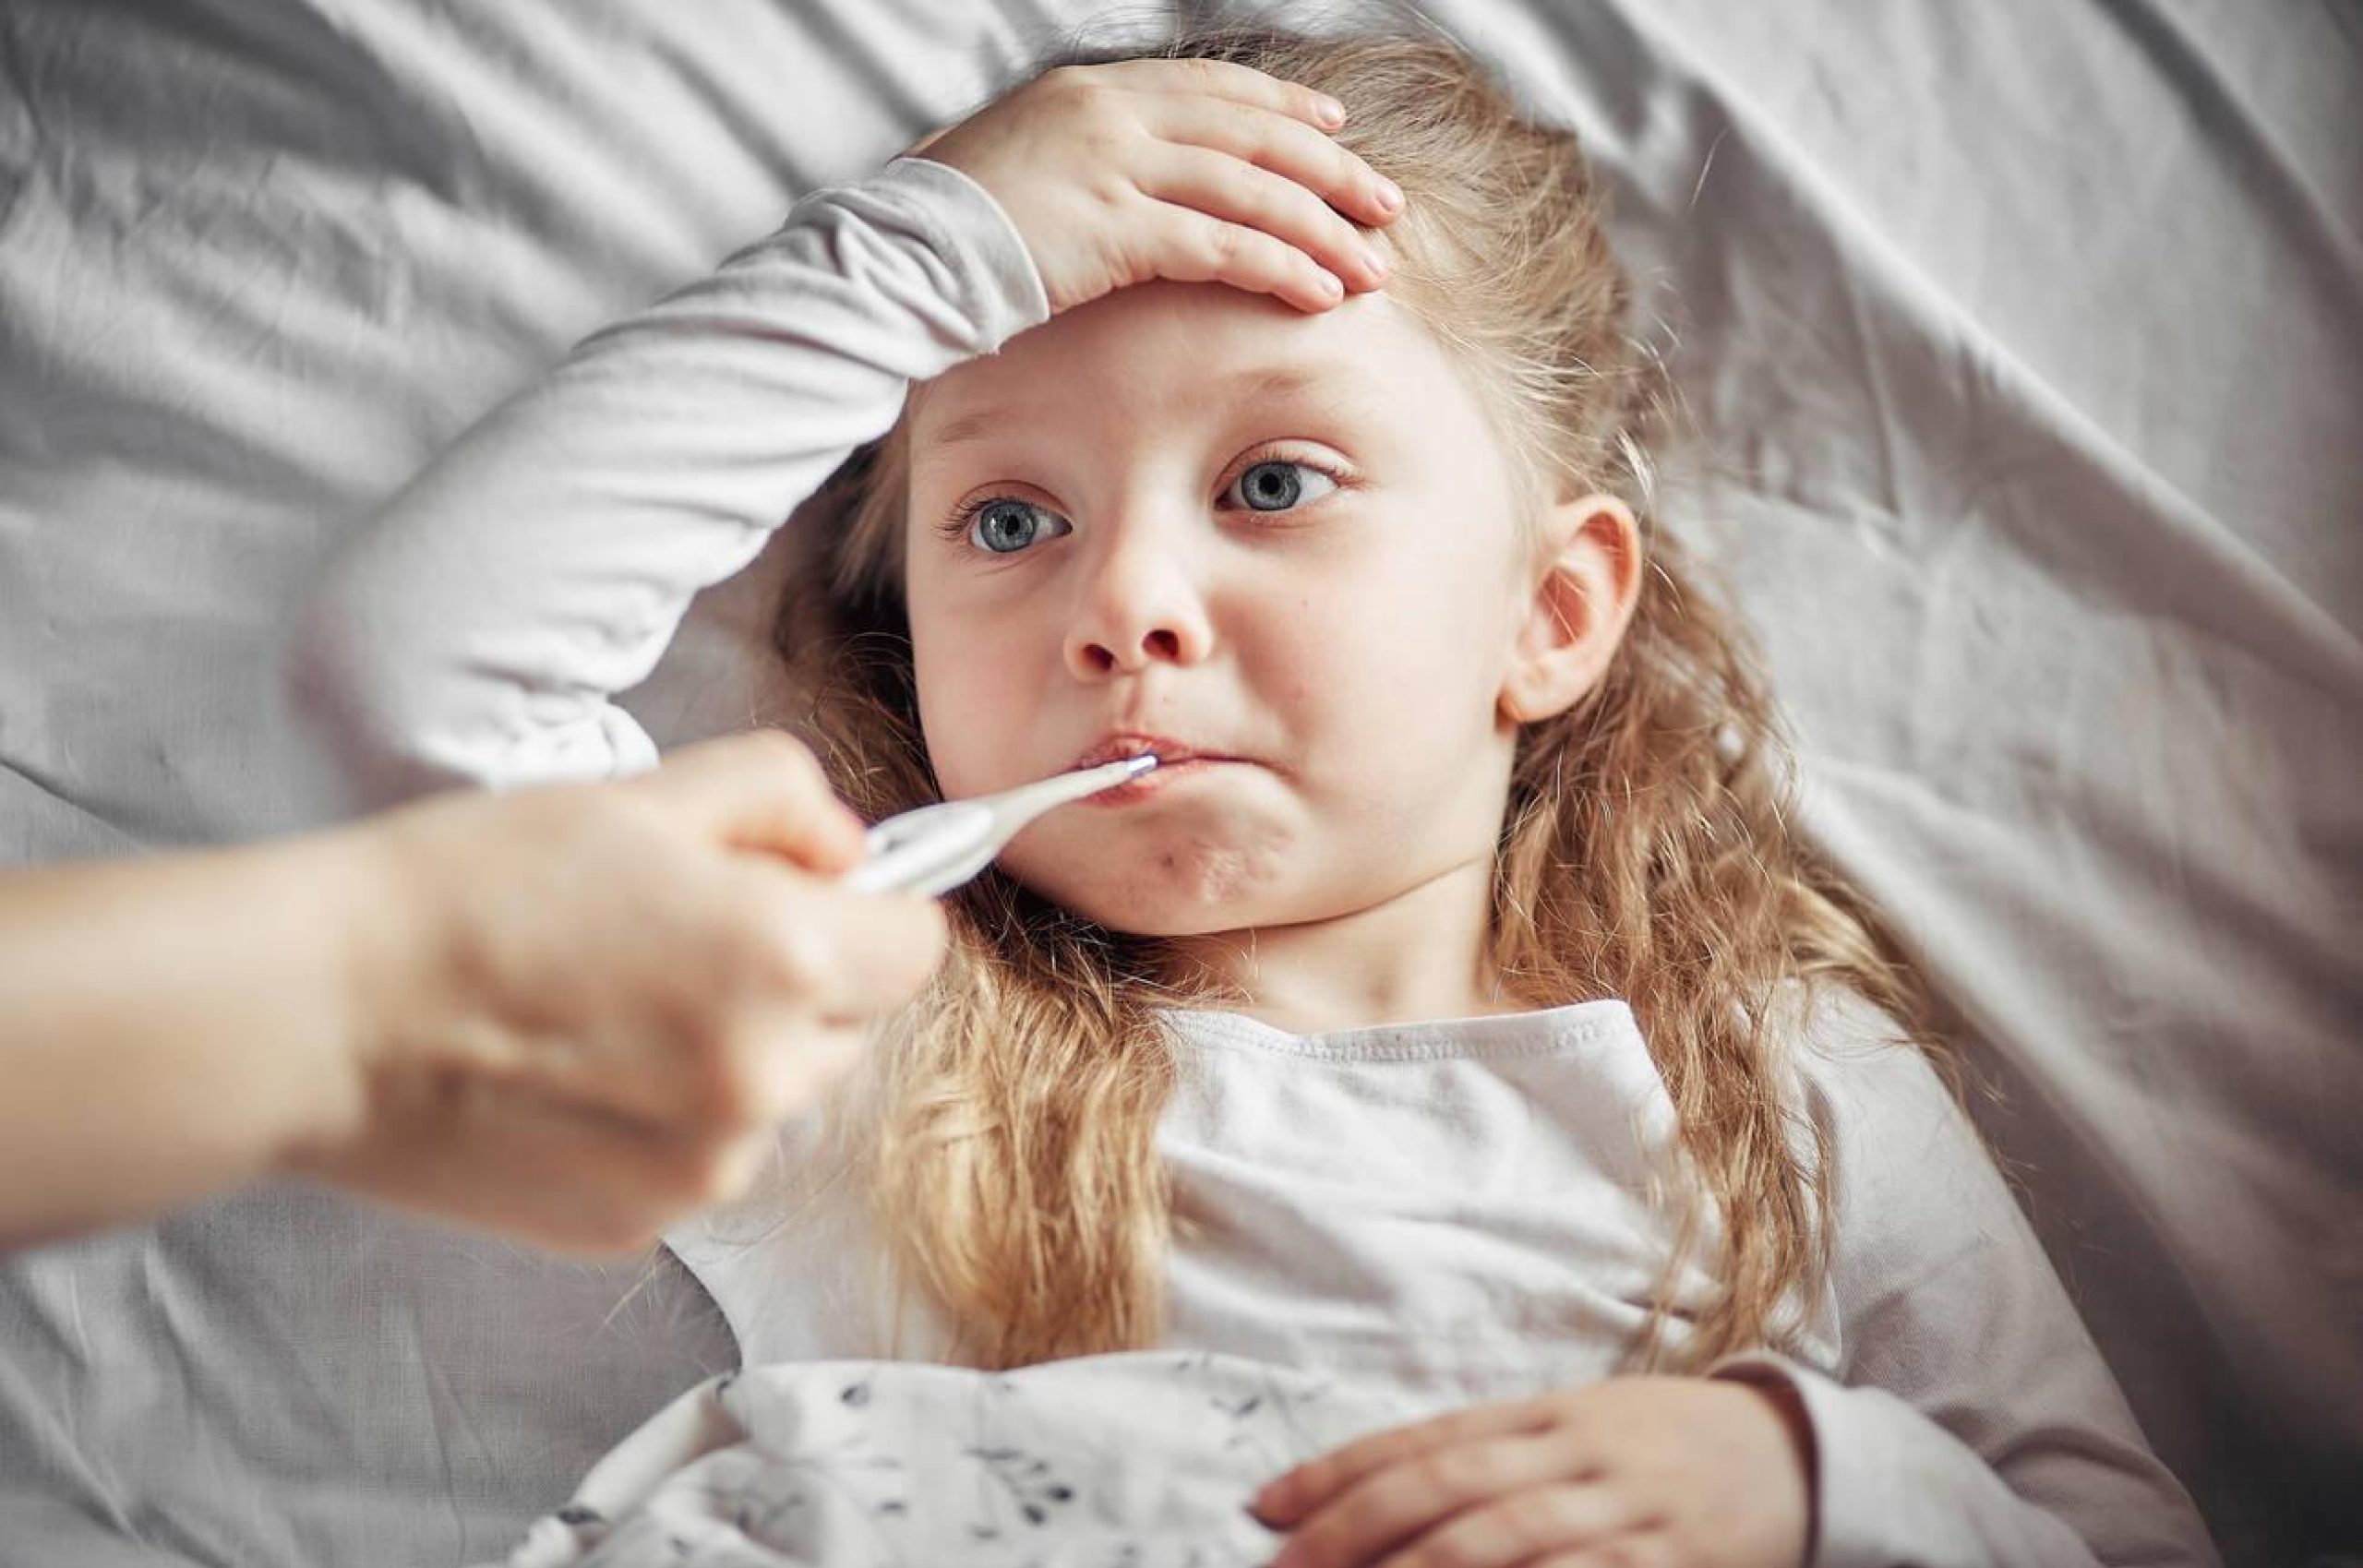 Tips for Treating the Flu in Children